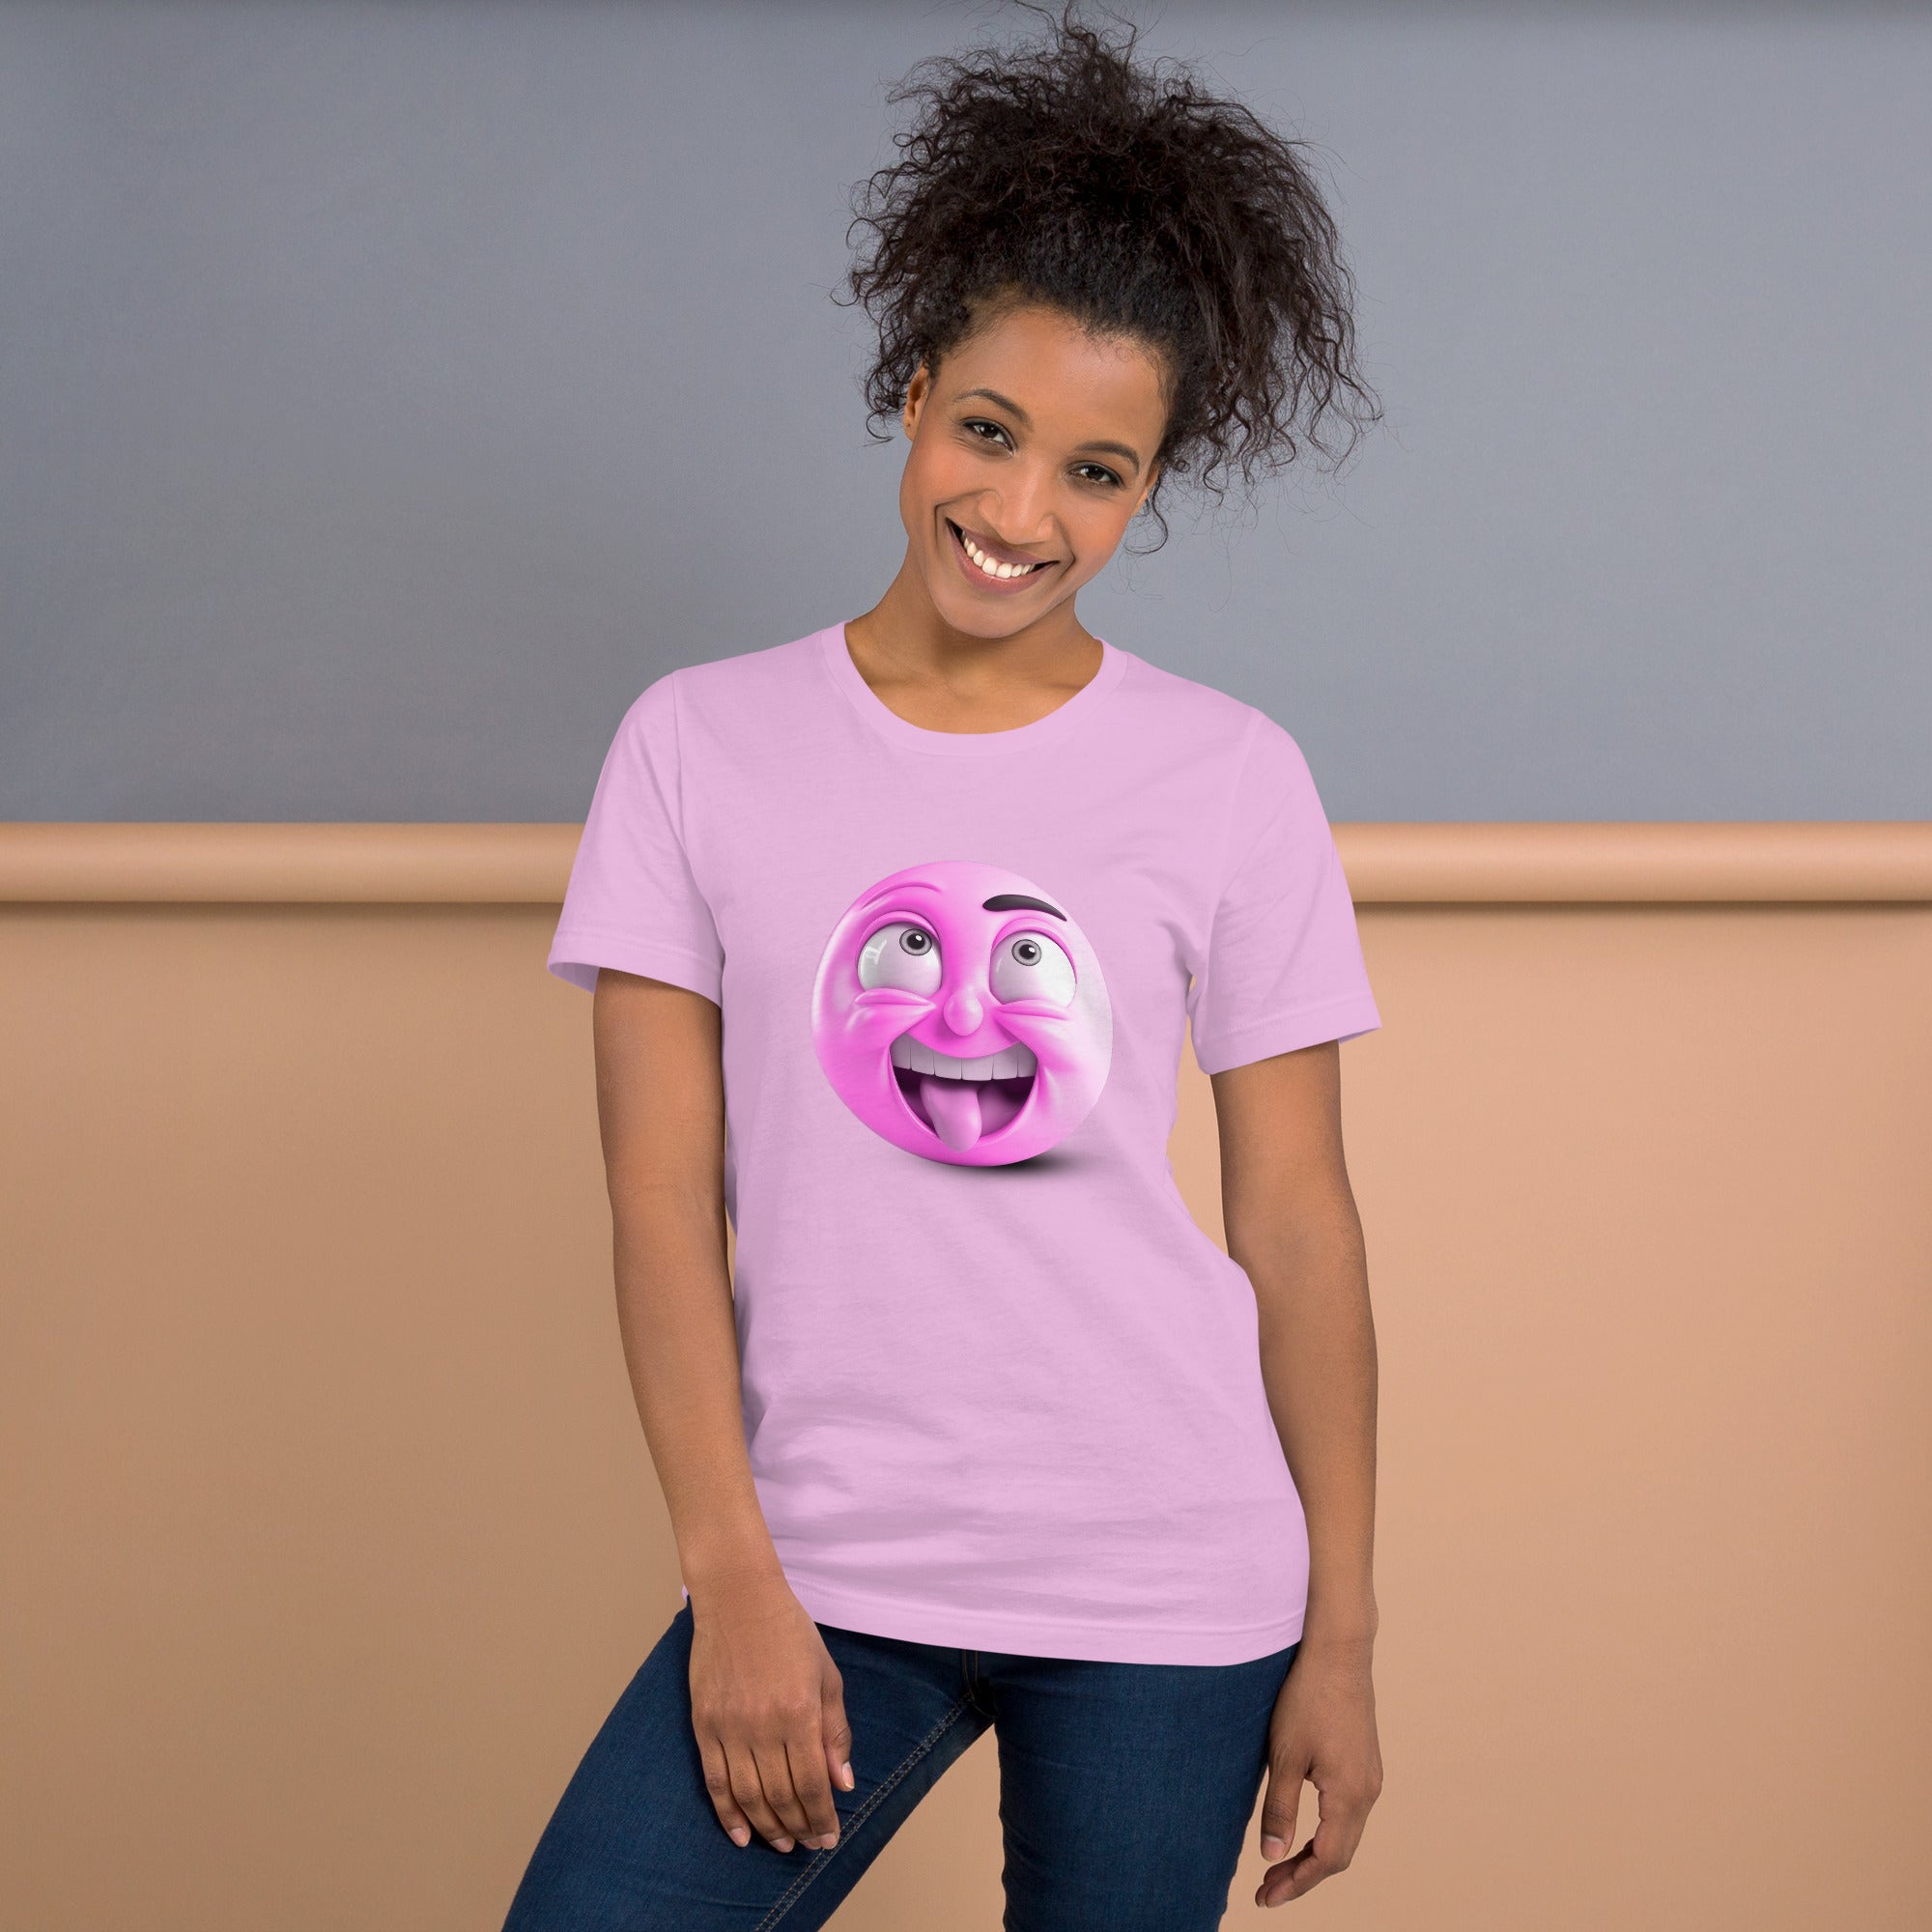 Winking Face Emoji Design on Unisex T-Shirt